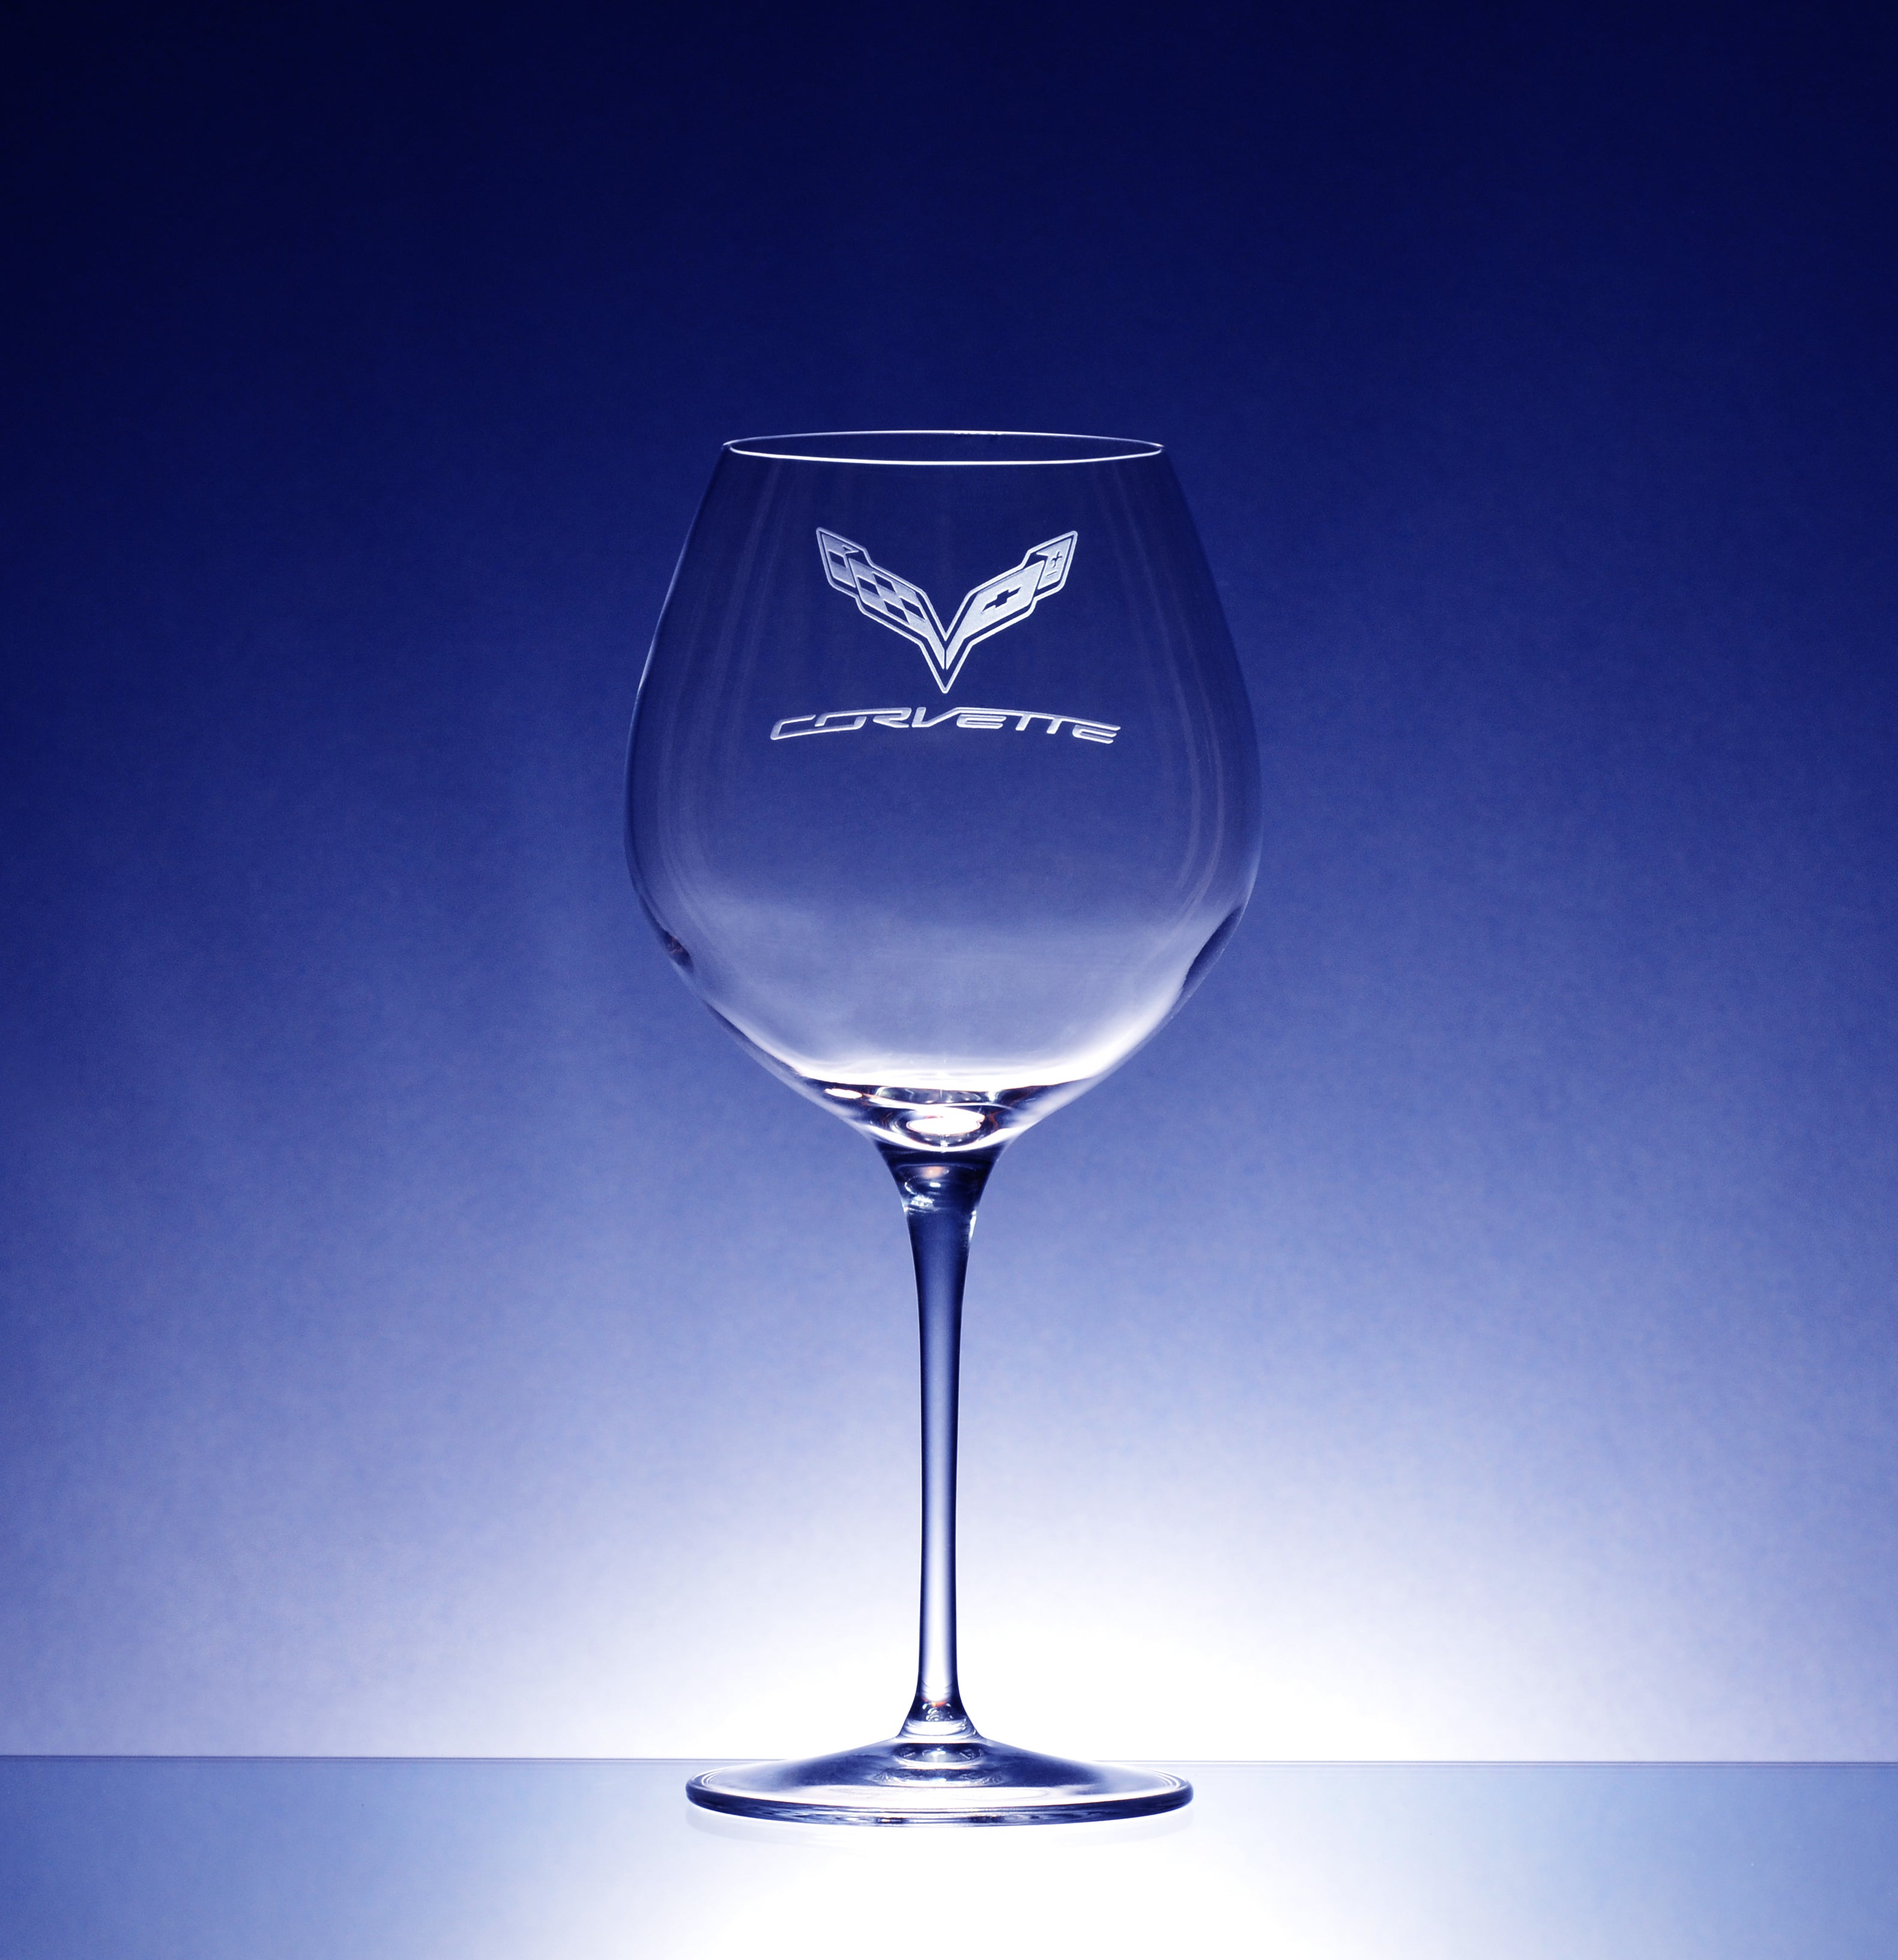 Luigi Bormioli Crescendo 22.5 oz. Bourgogne Wine Glasses, Set of 4